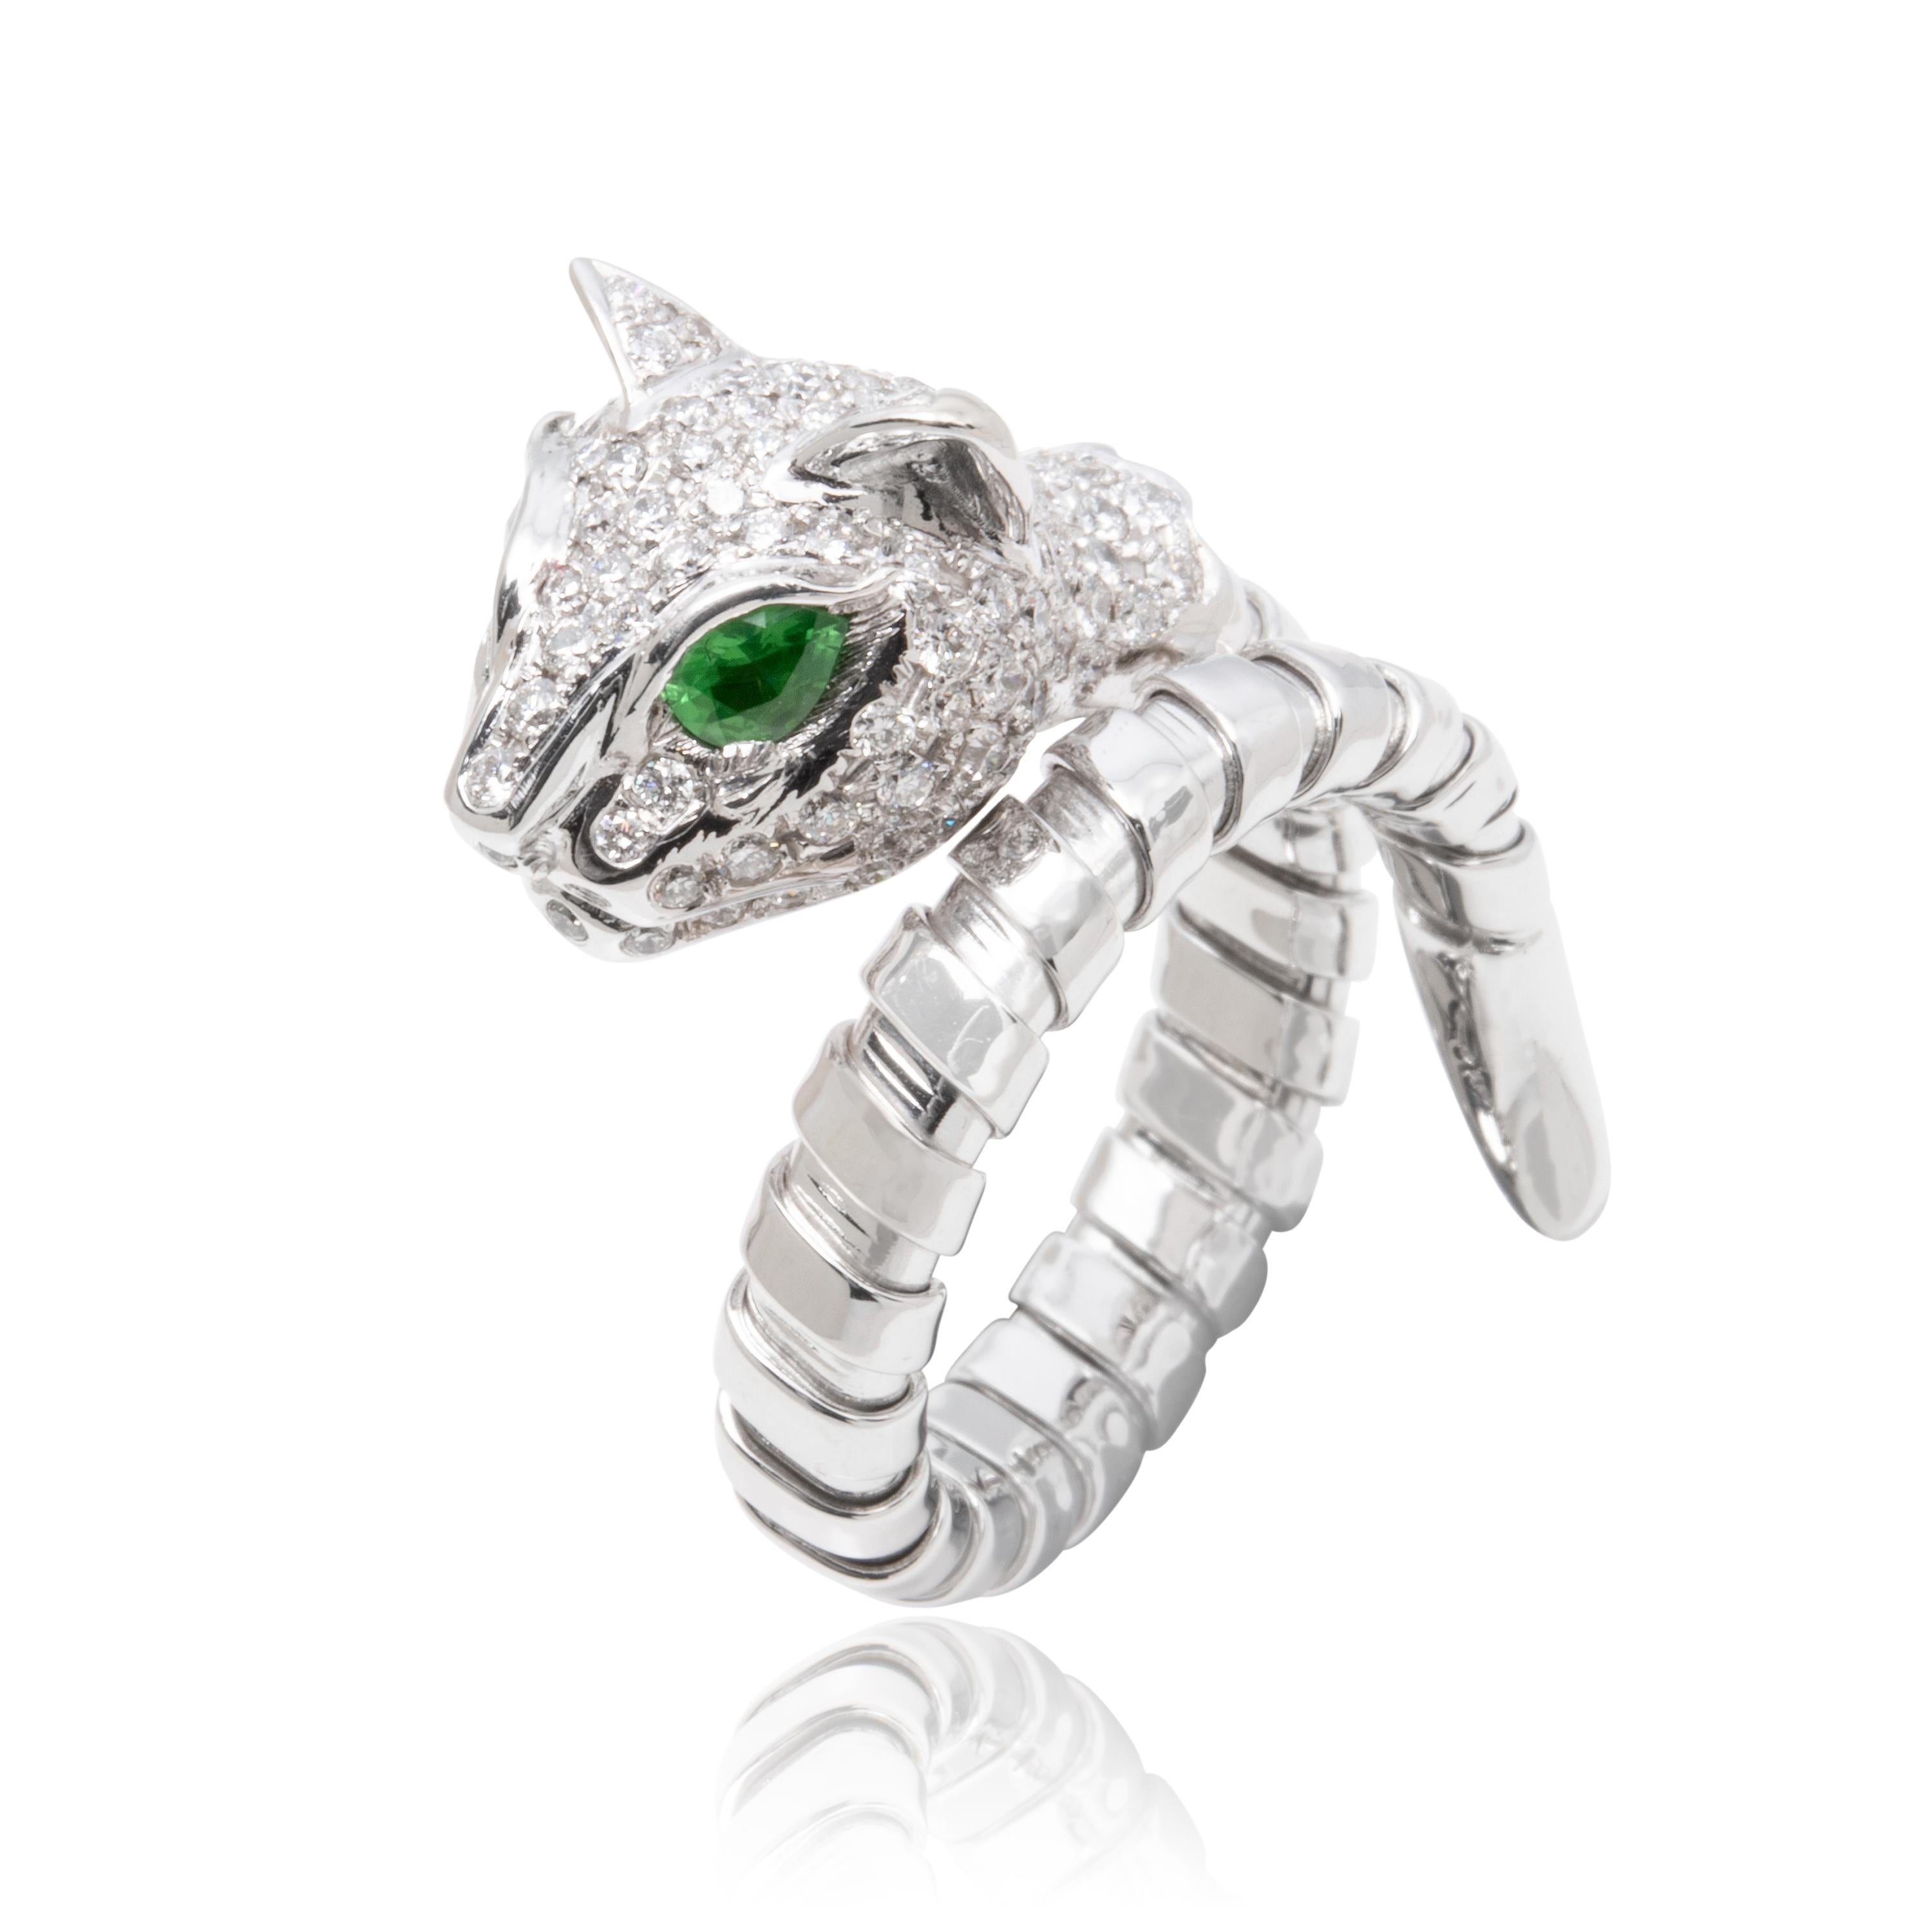 Marquise Cut An Order of Bling Tsavorite and Diamond Cat Ring, 18 Karat White Gold